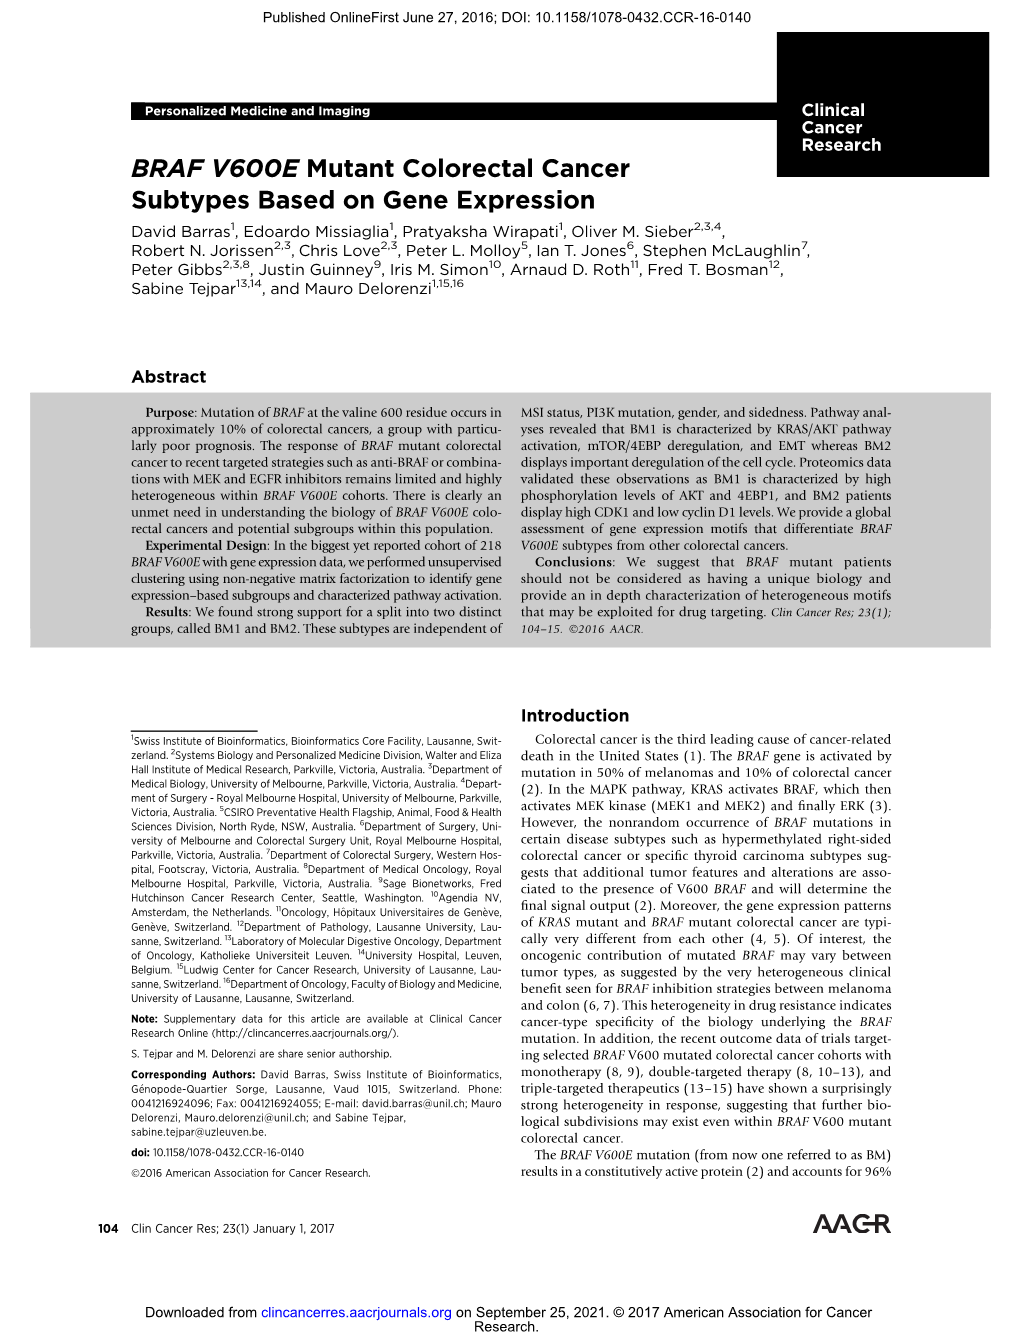 BRAF V600E Mutant Colorectal Cancer Subtypes Based on Gene Expression David Barras1, Edoardo Missiaglia1, Pratyaksha Wirapati1, Oliver M